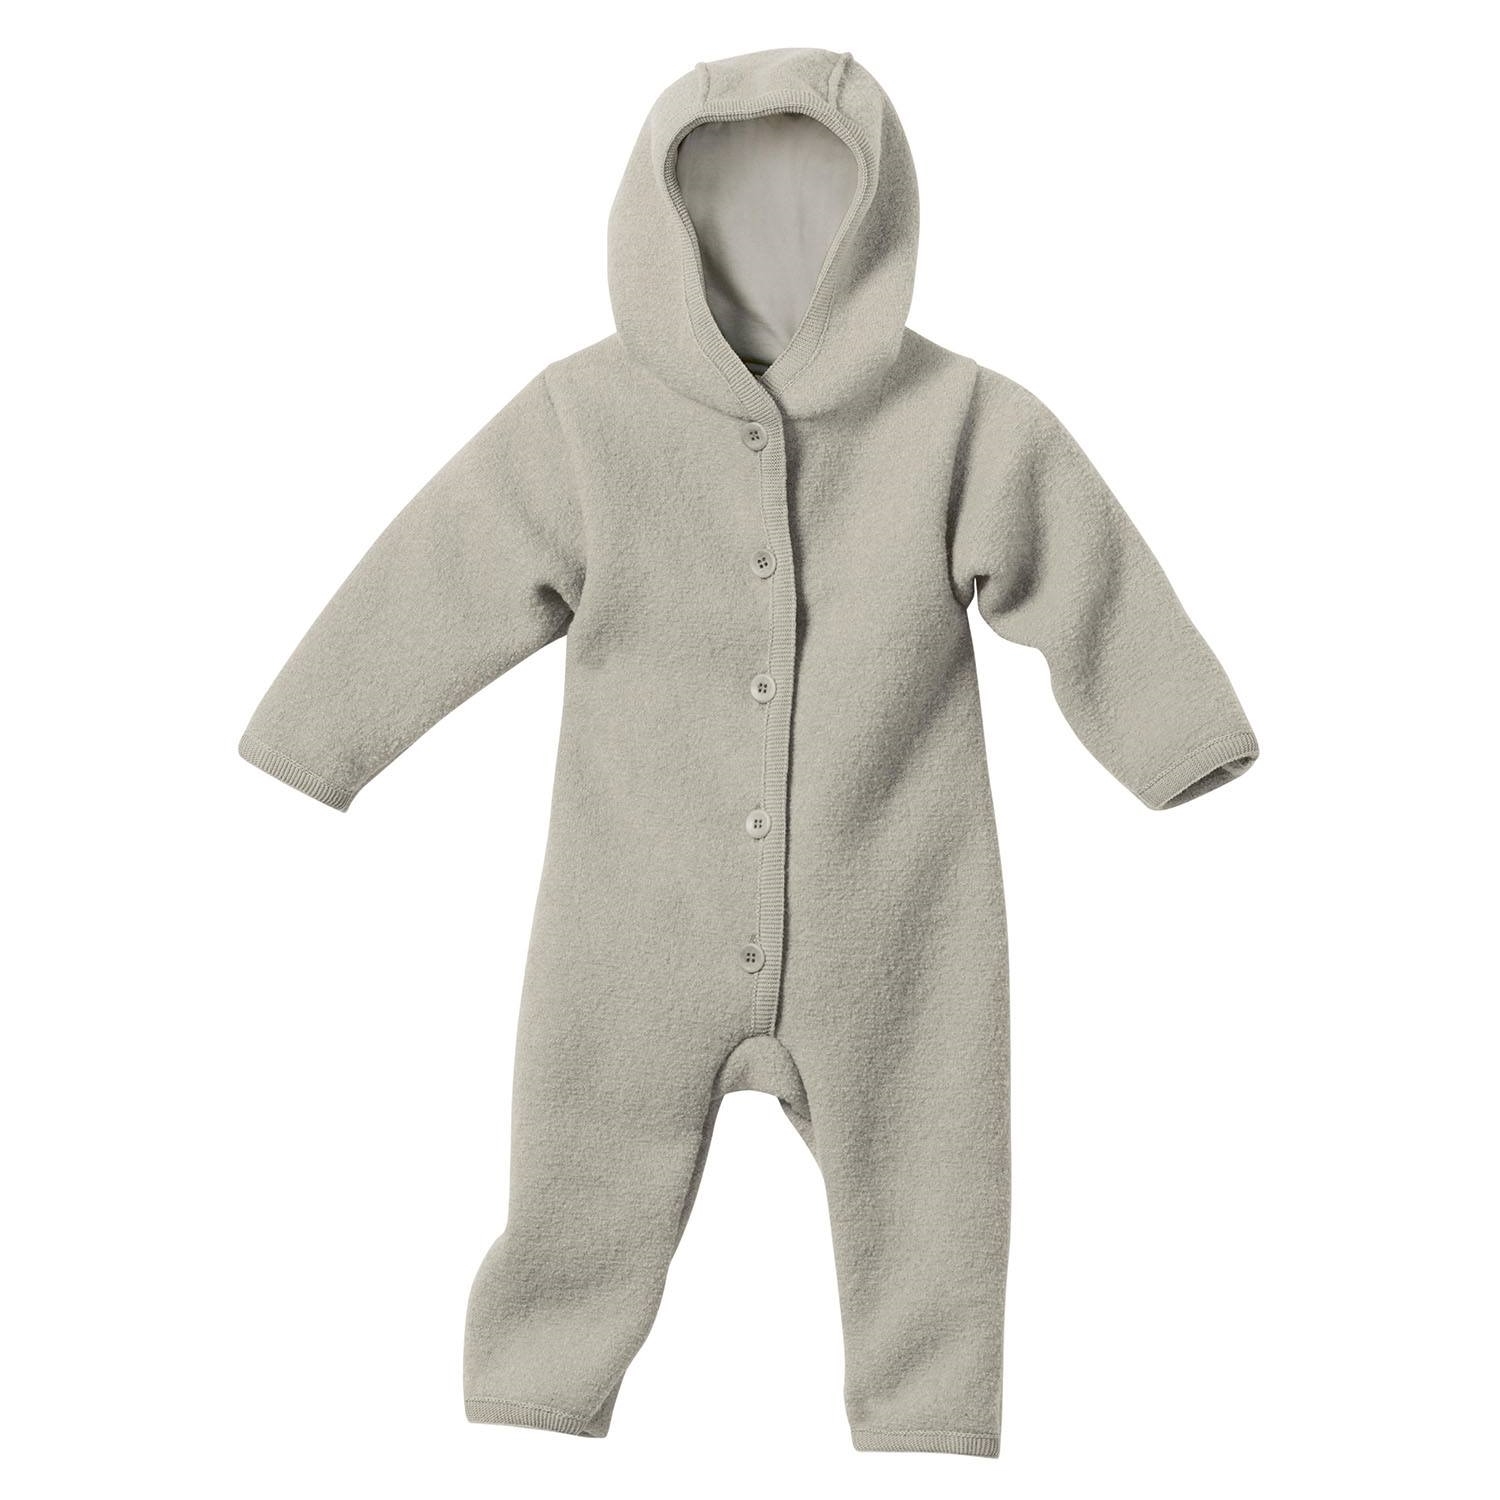 Disana - babytøj og børnetøj alt i økologisk uld.